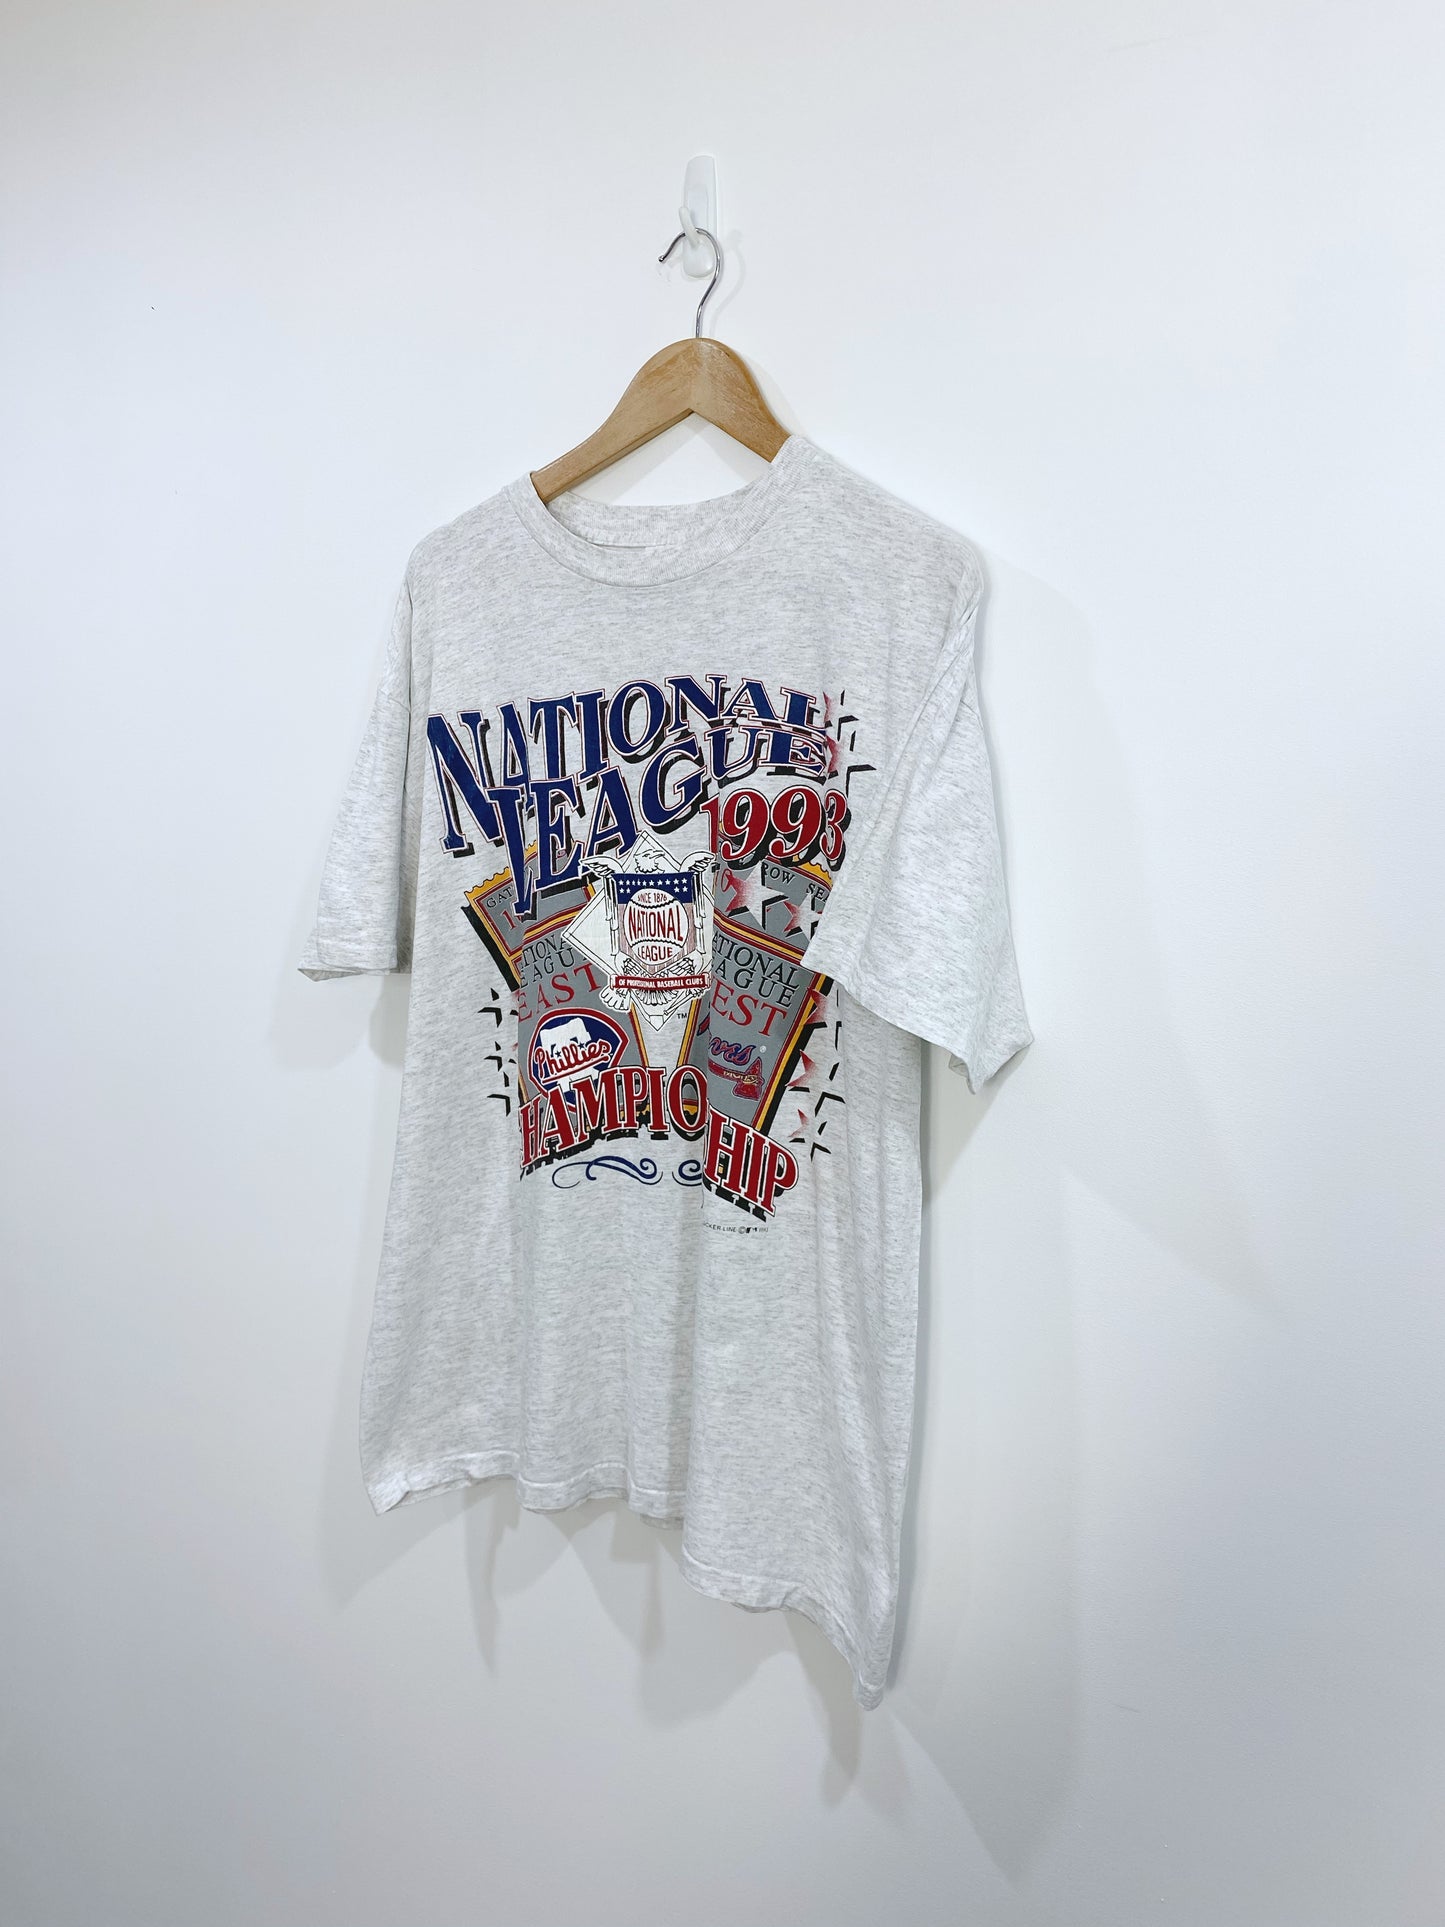 Vintage 1993 Phillies Vs Braves Championship T-shirt L